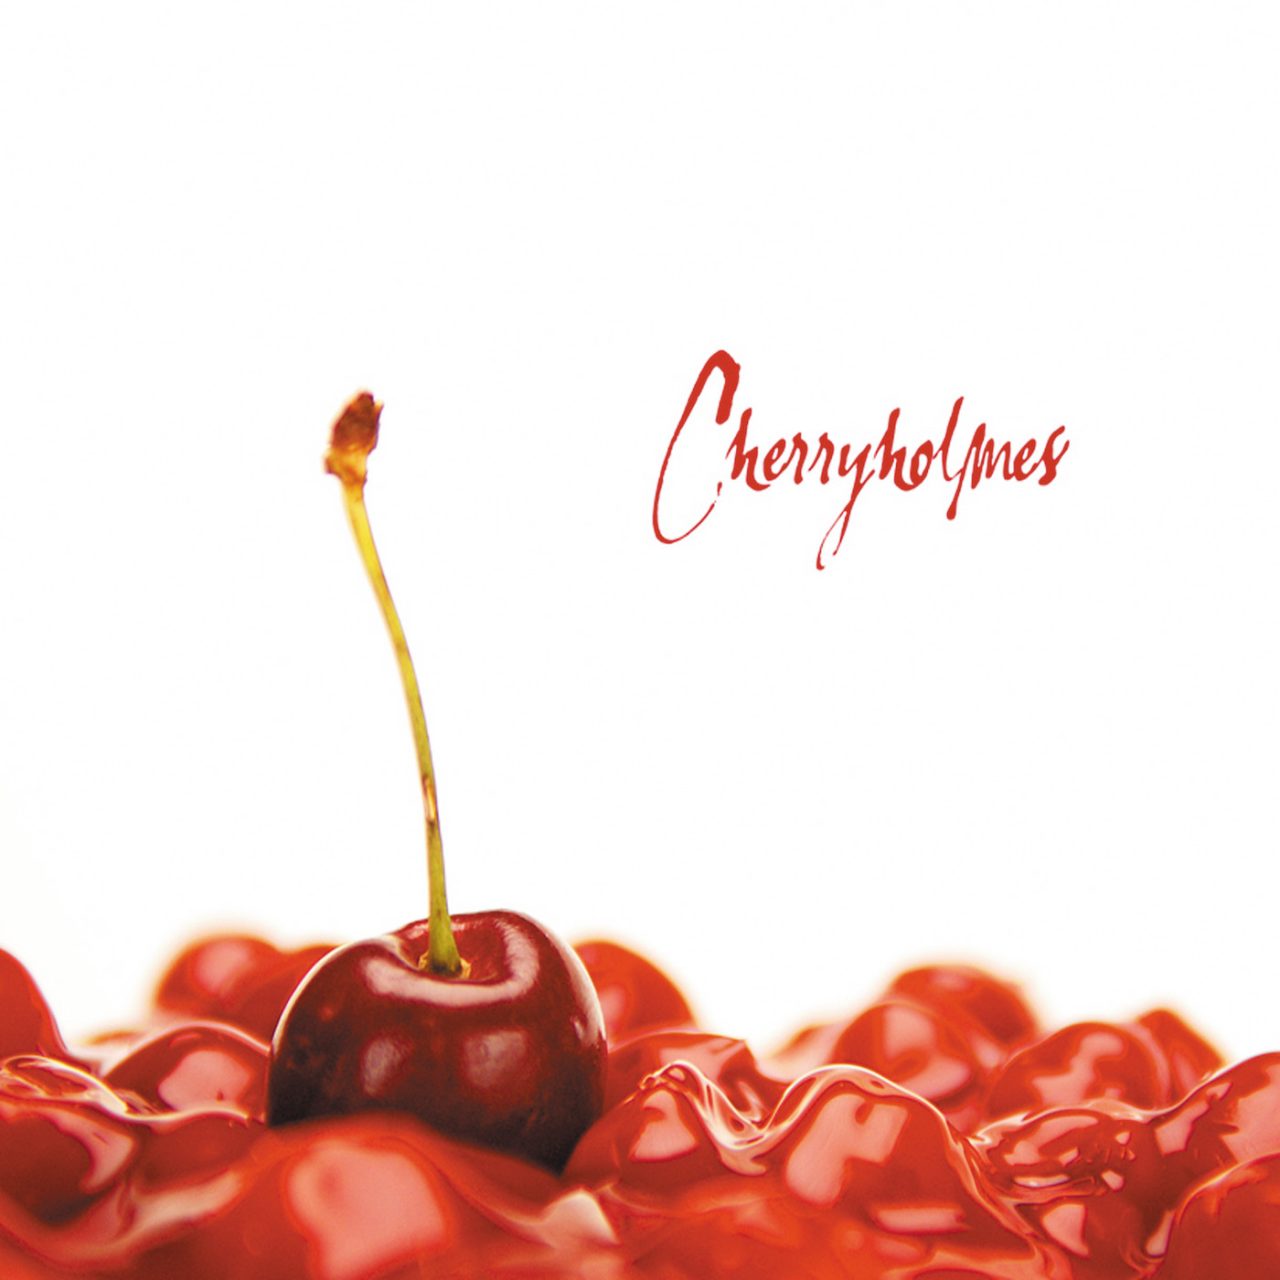 Cherryholmes - Cherryholmes cover album